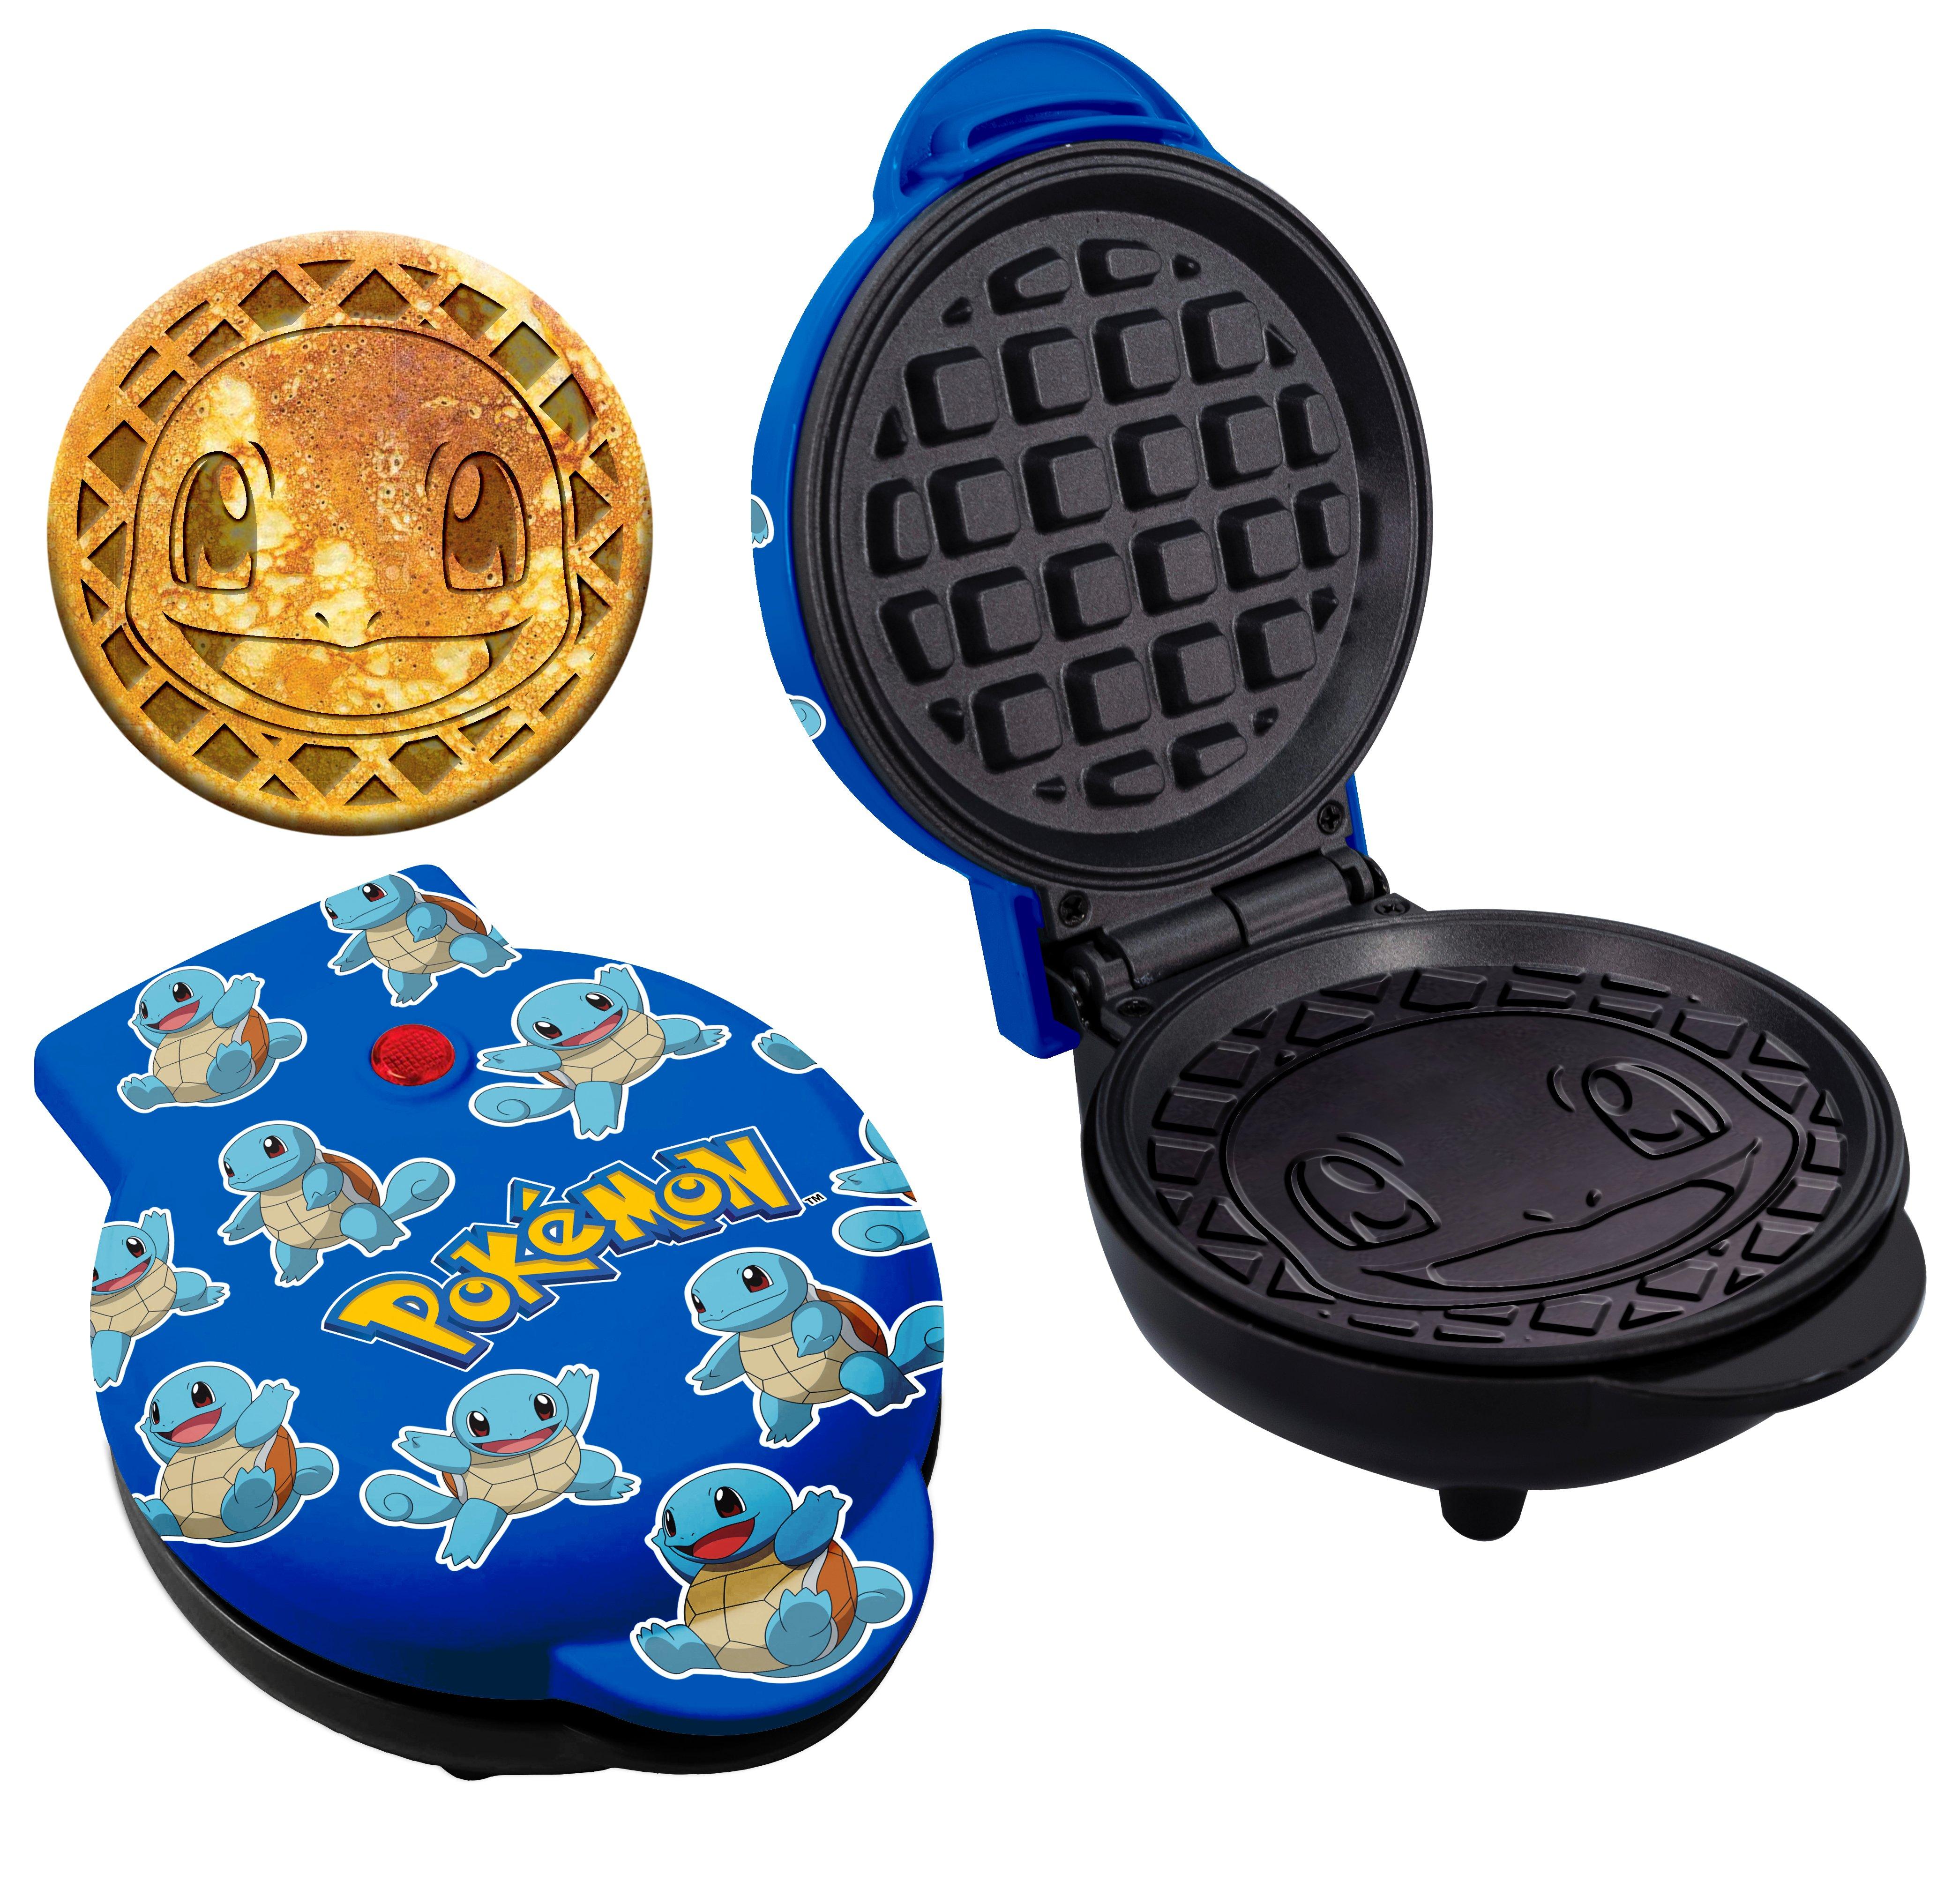 https://media.gamestop.com/i/gamestop/20004228_ALT02/Pokemon-Squirtle-Mini-Waffle-Maker-GameStop-Exclusive?$pdp$